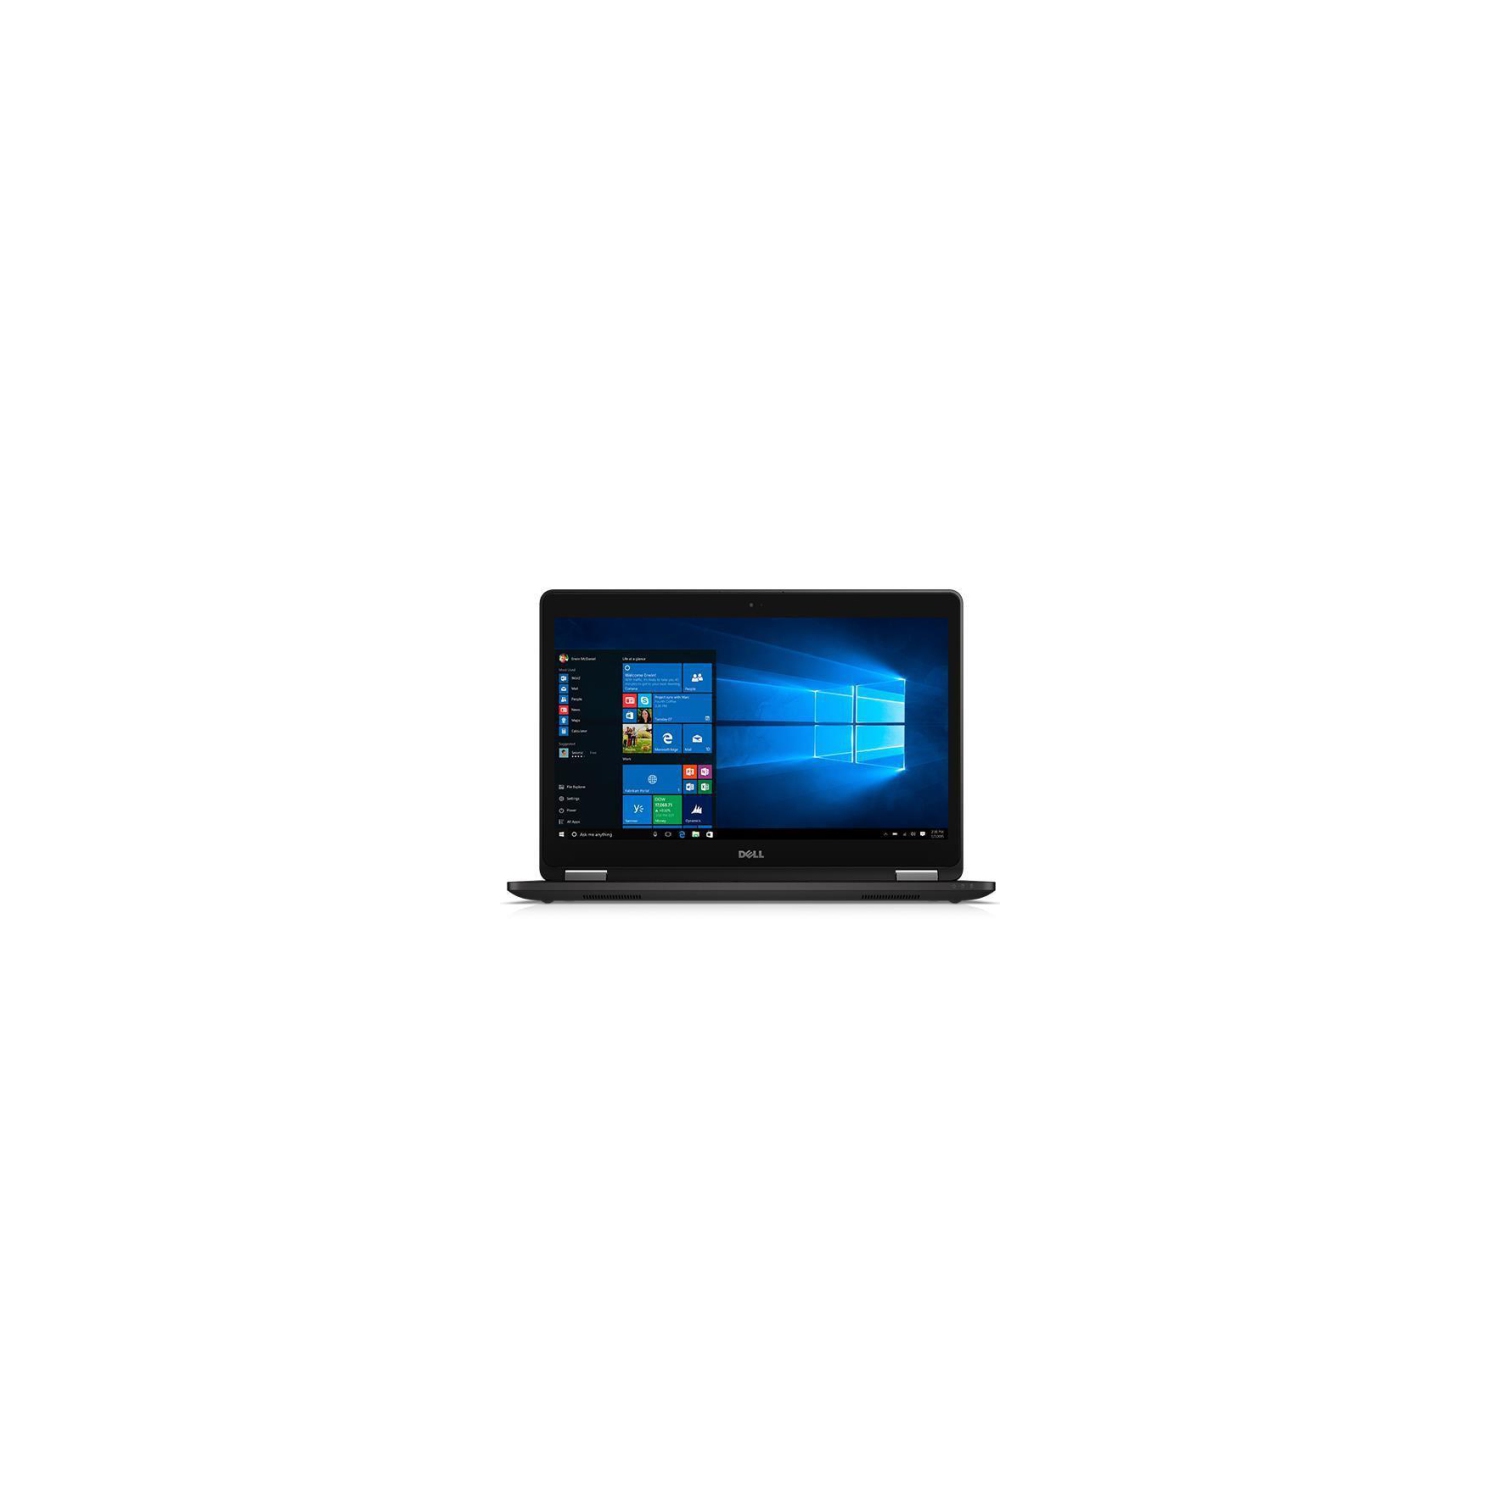 Refurbished (Good) - Dell Latitude E7470 Ultrabook: i5-6300U 2.4GHz, 8GB, 256GB SSD, HDMI, 14", Backlit KB, win 10 Pro, NO Webcam "â€œ - Black